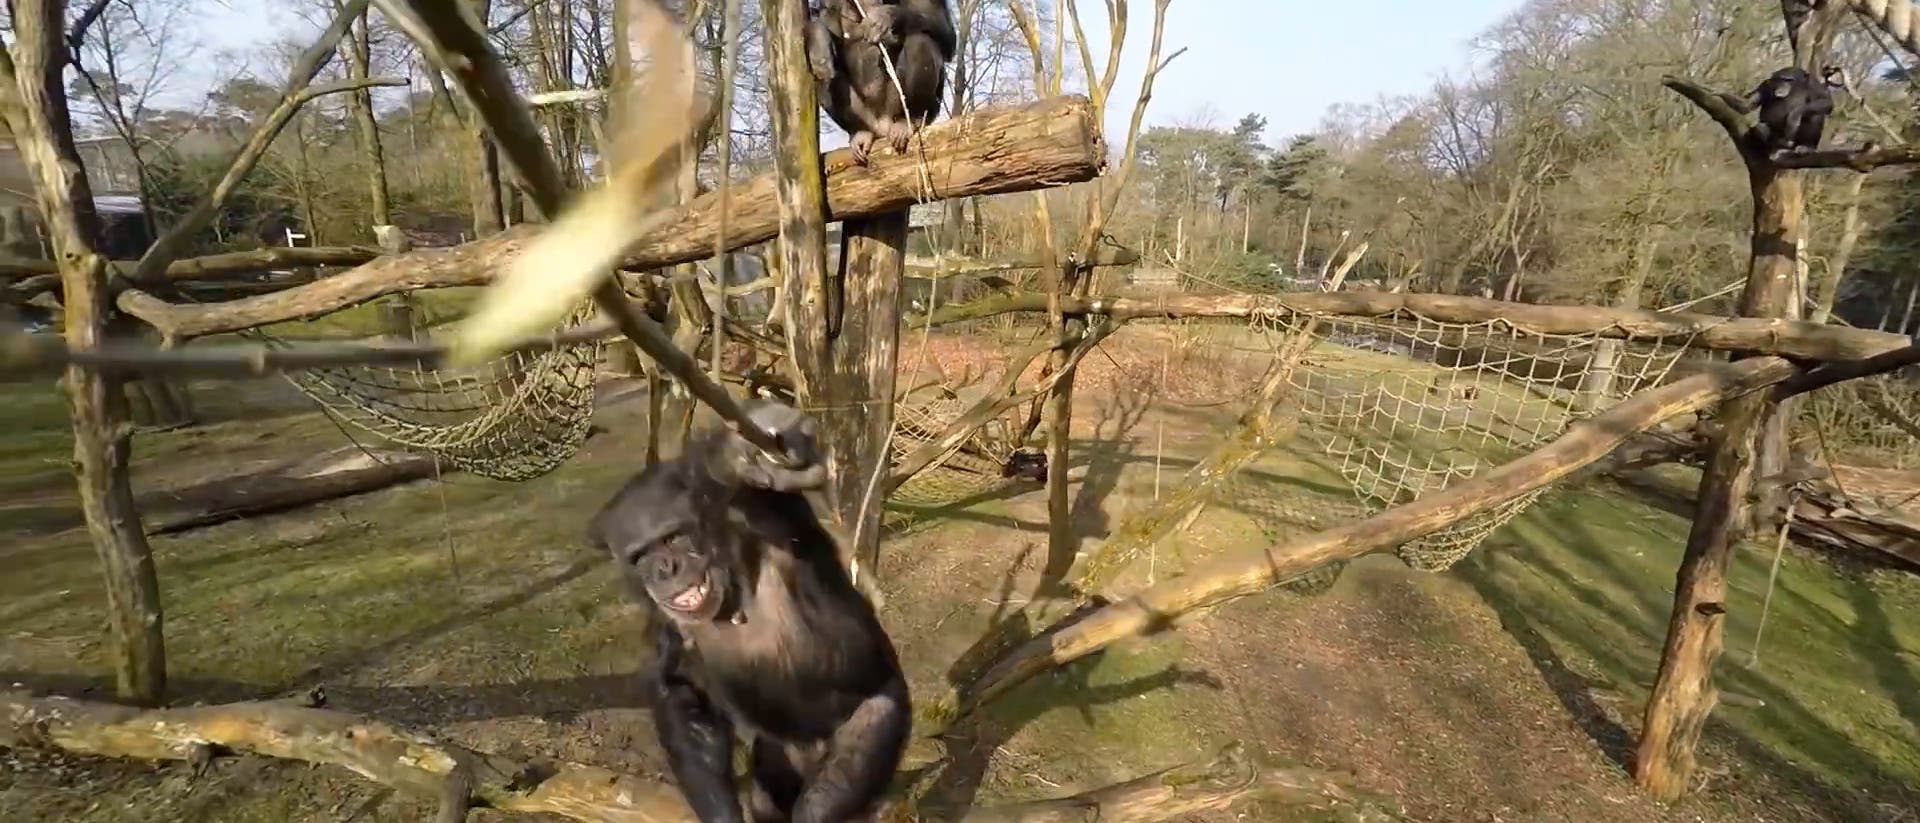 Schimpansin Tushi holt die Drohne vom Himmel